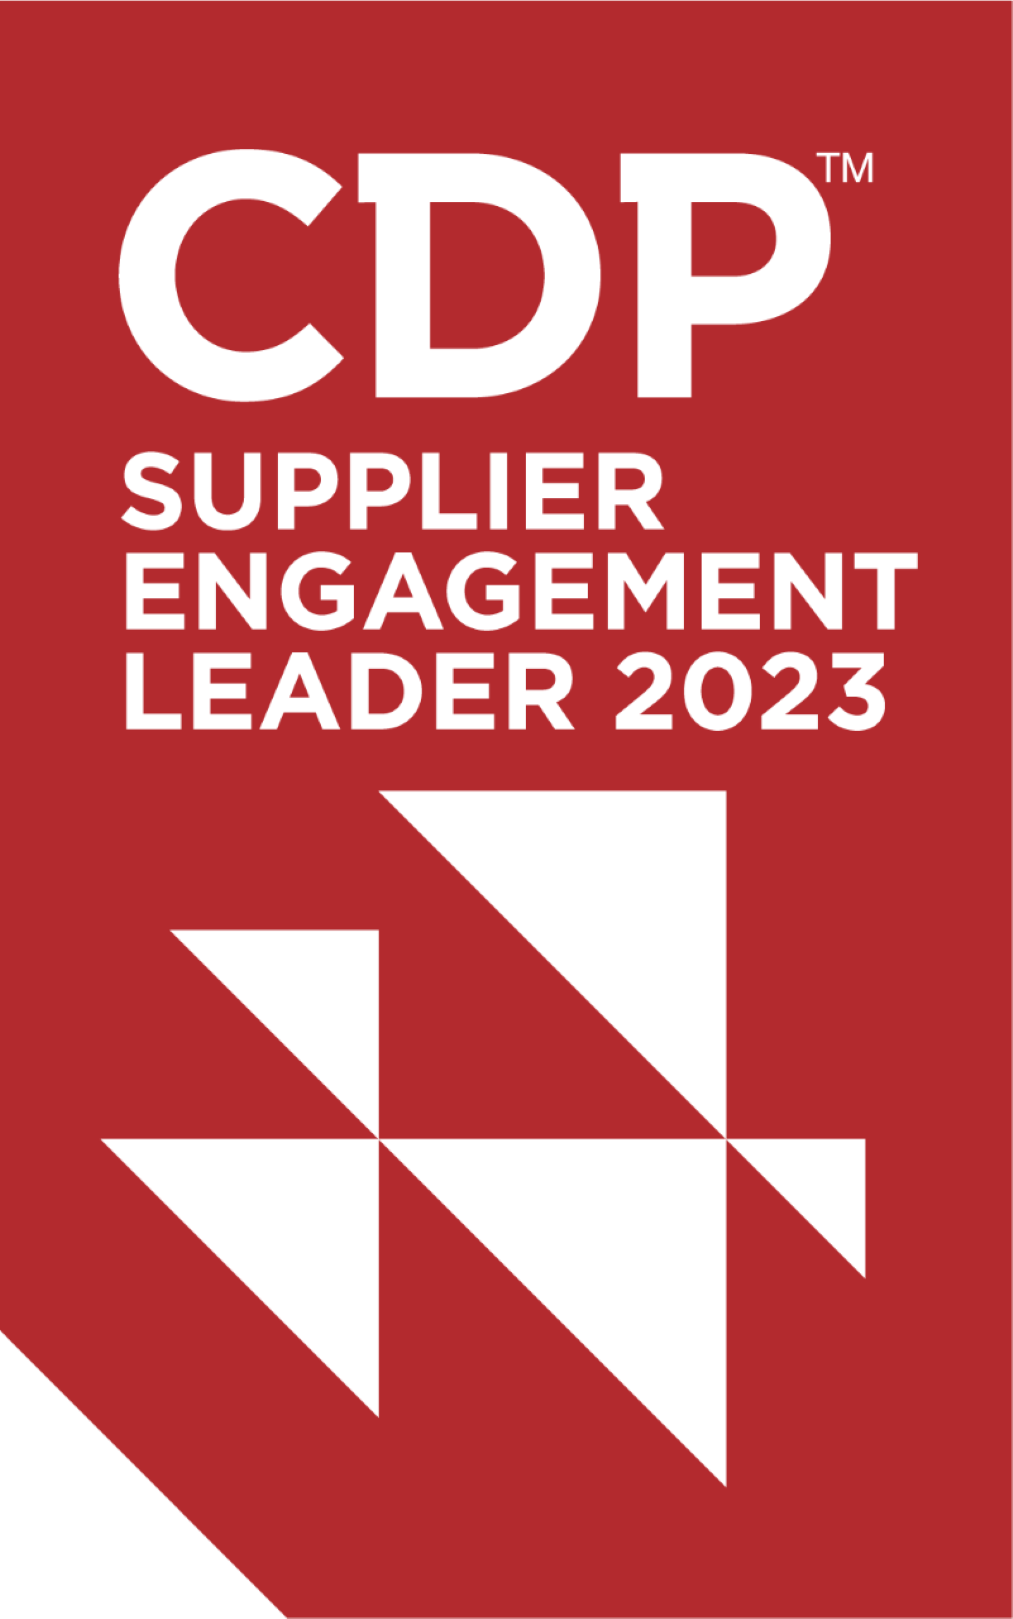 CDP SUPPLIER ENGAGEMENT LEADER 2022 logo